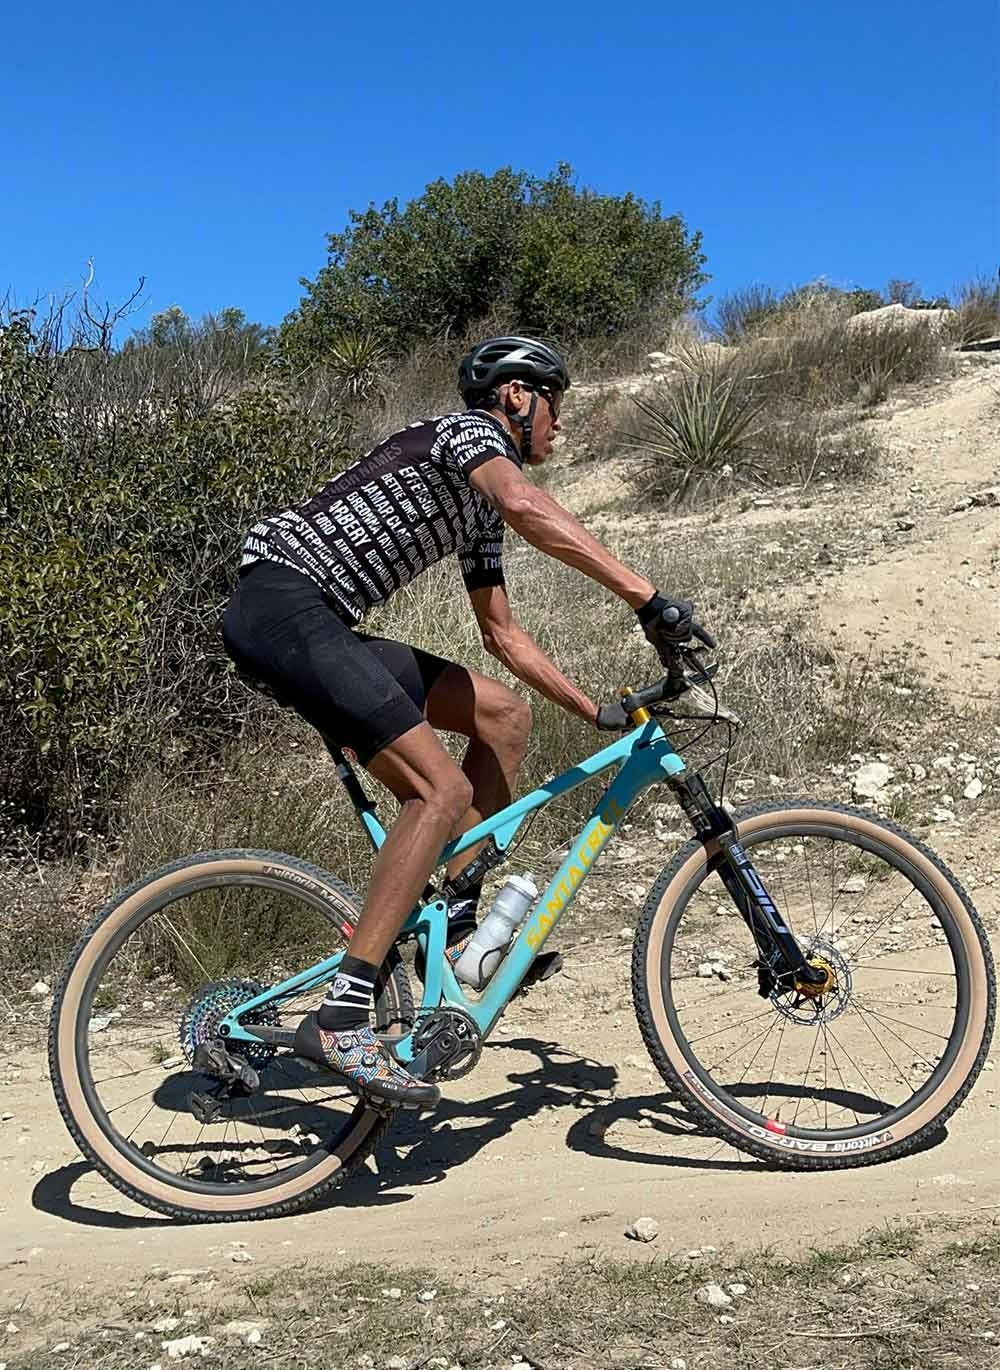 Reggie Miller riding his Santa Cruz Blur in the desert